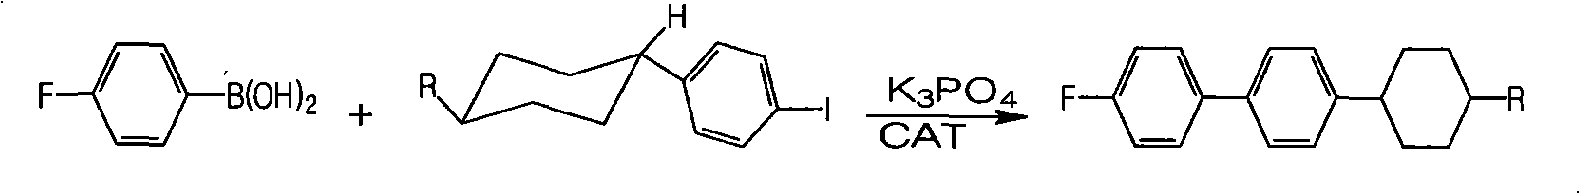 Method for synthesizing fluorine-containing antiform alkyl cyclohexyl biphenyl single liquid crystal